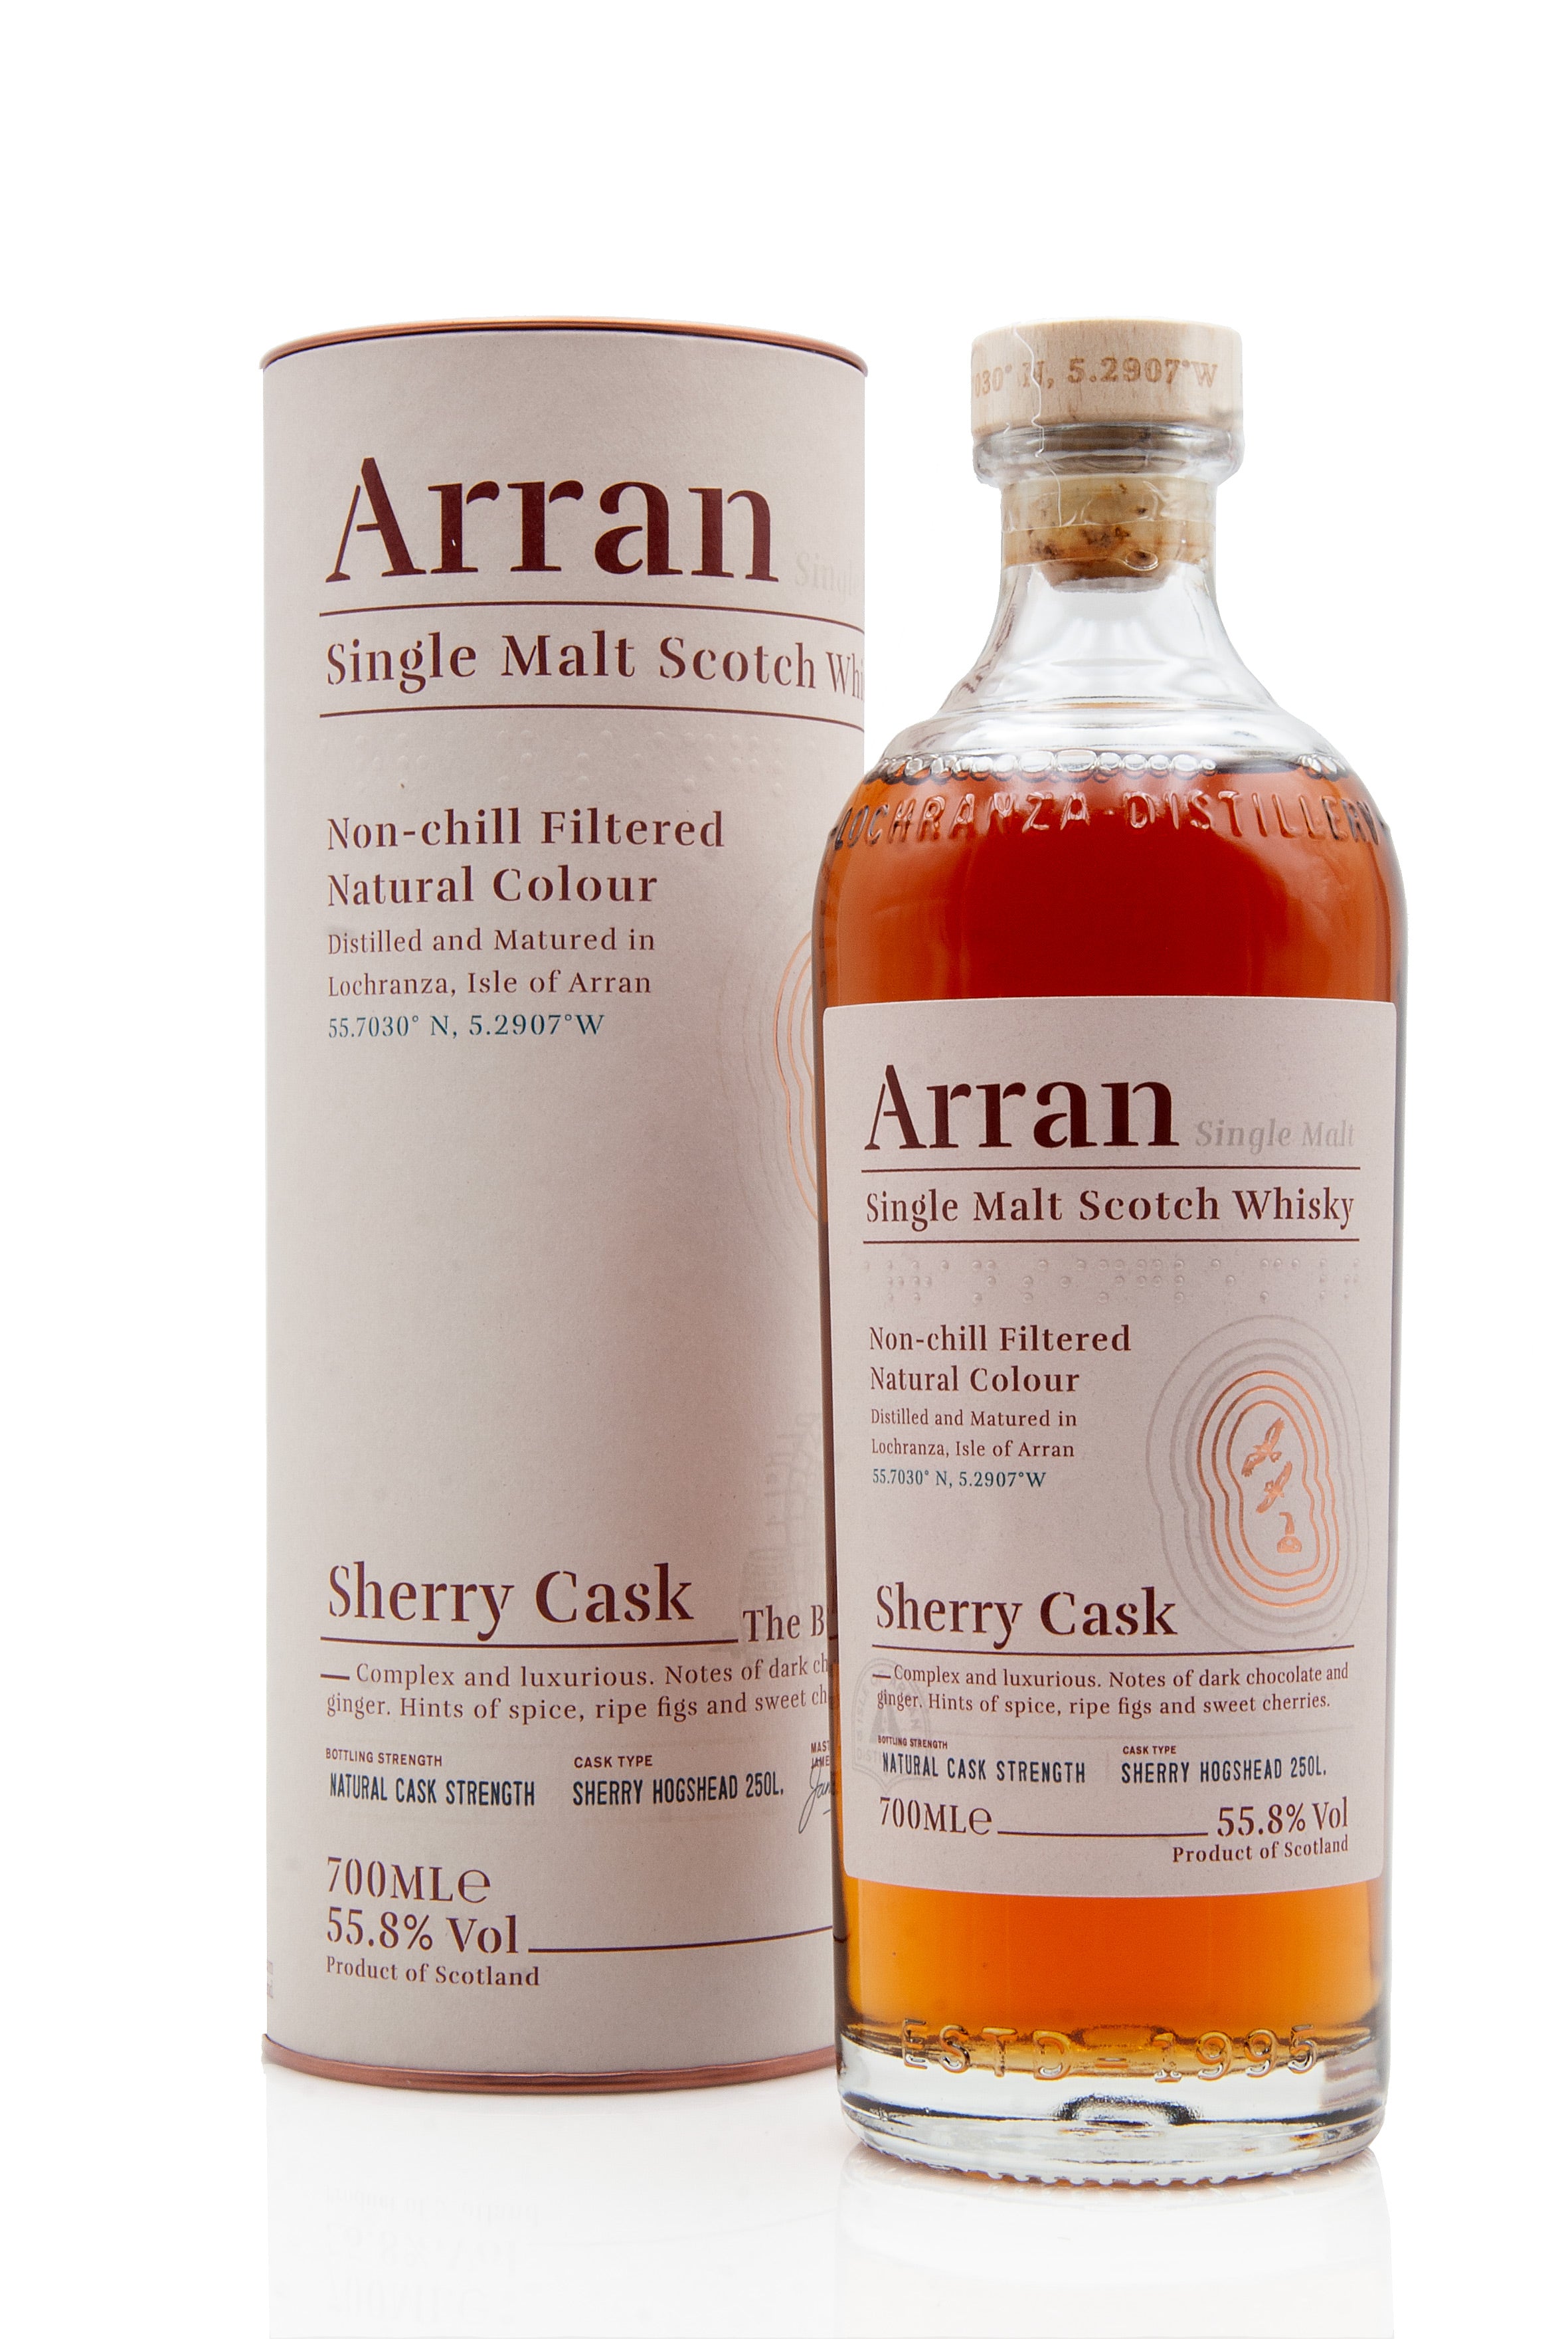 Arran Sherry Cask 'The Bodega' Island Single Malt Scotch Whisky